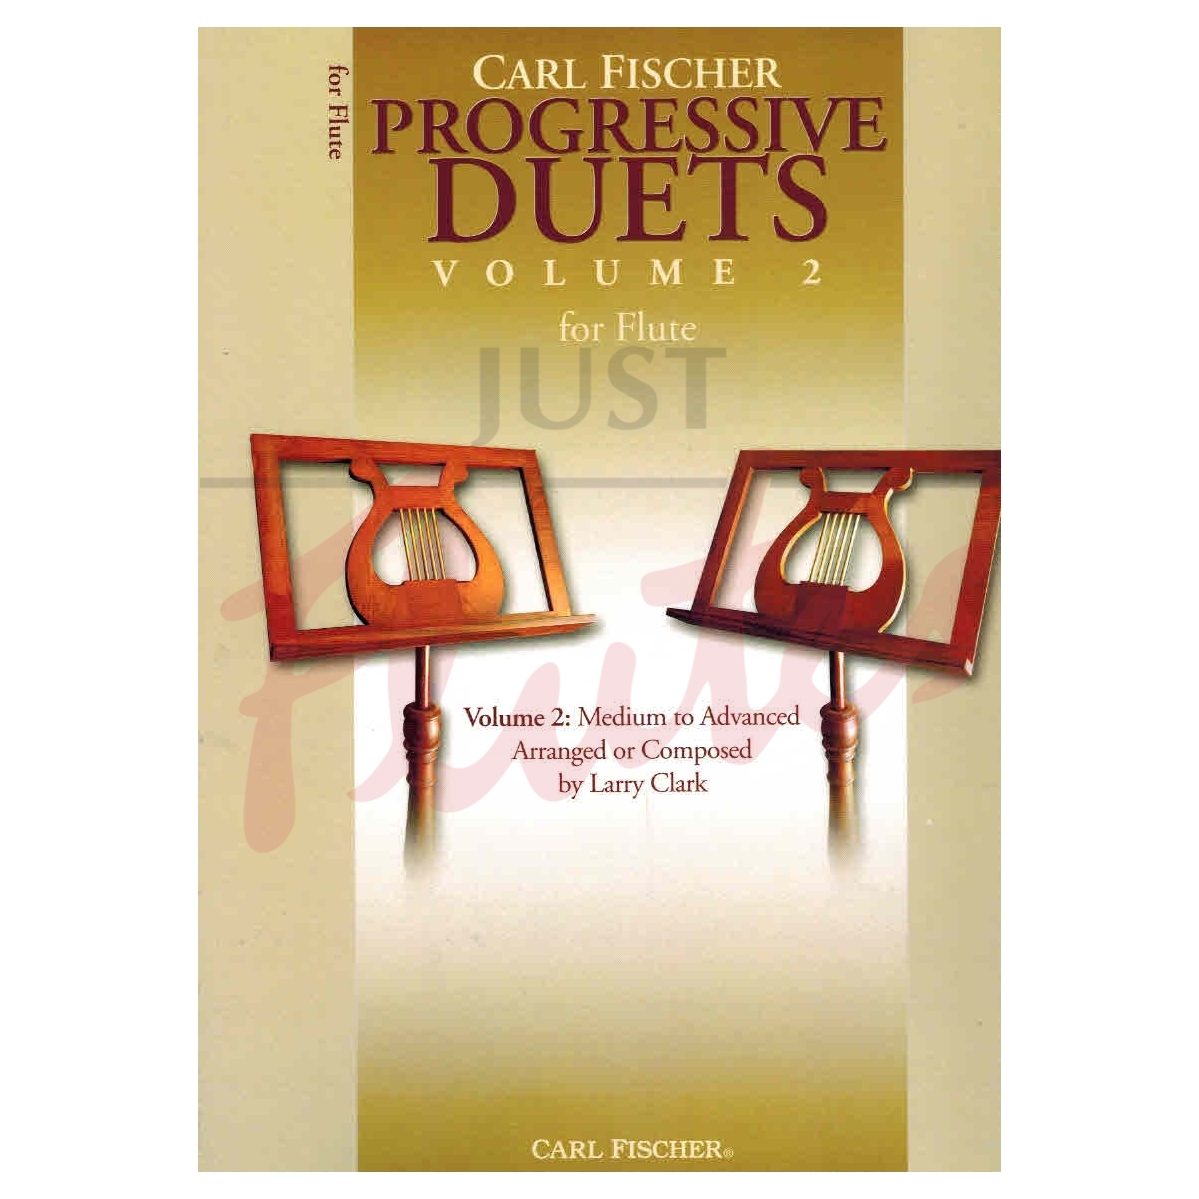 Progressive Duets Volume 2 for Flute